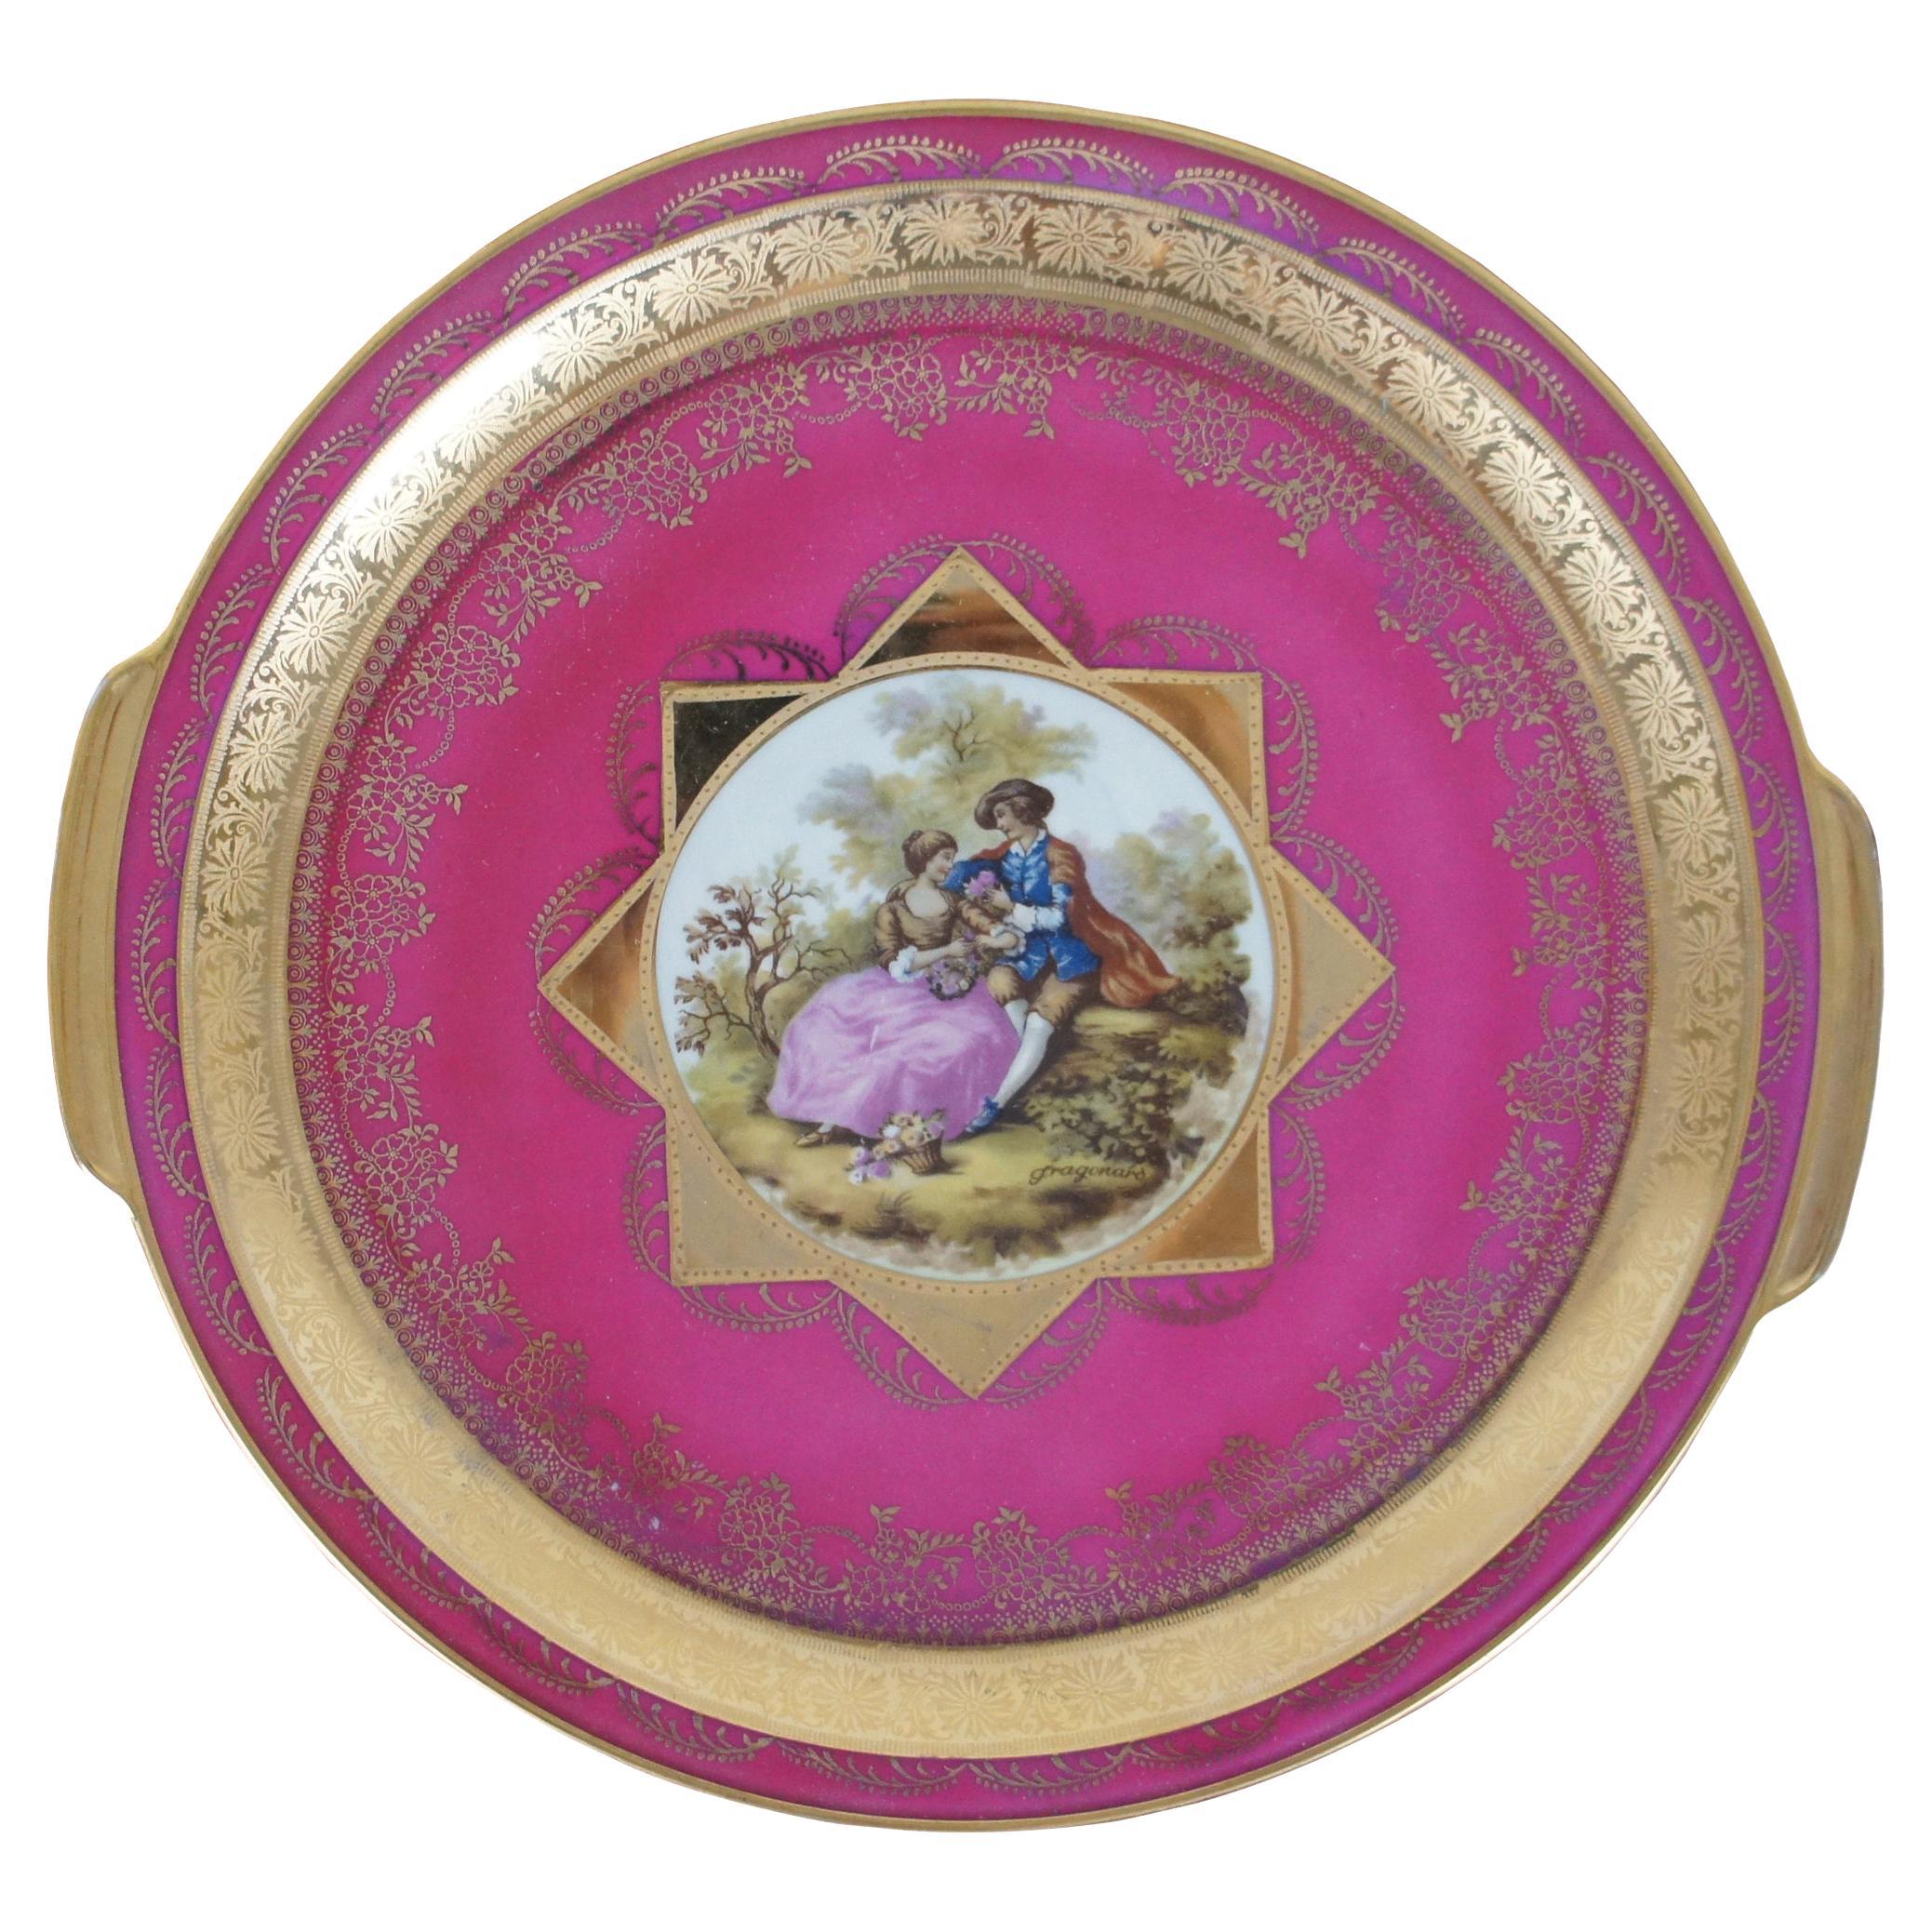 Vintage Royal Bavarian Hutschenreuther Selb Gold Encrusted Plate 11 Inch Dinner Plate Embossed Design 22KT Gold Charger